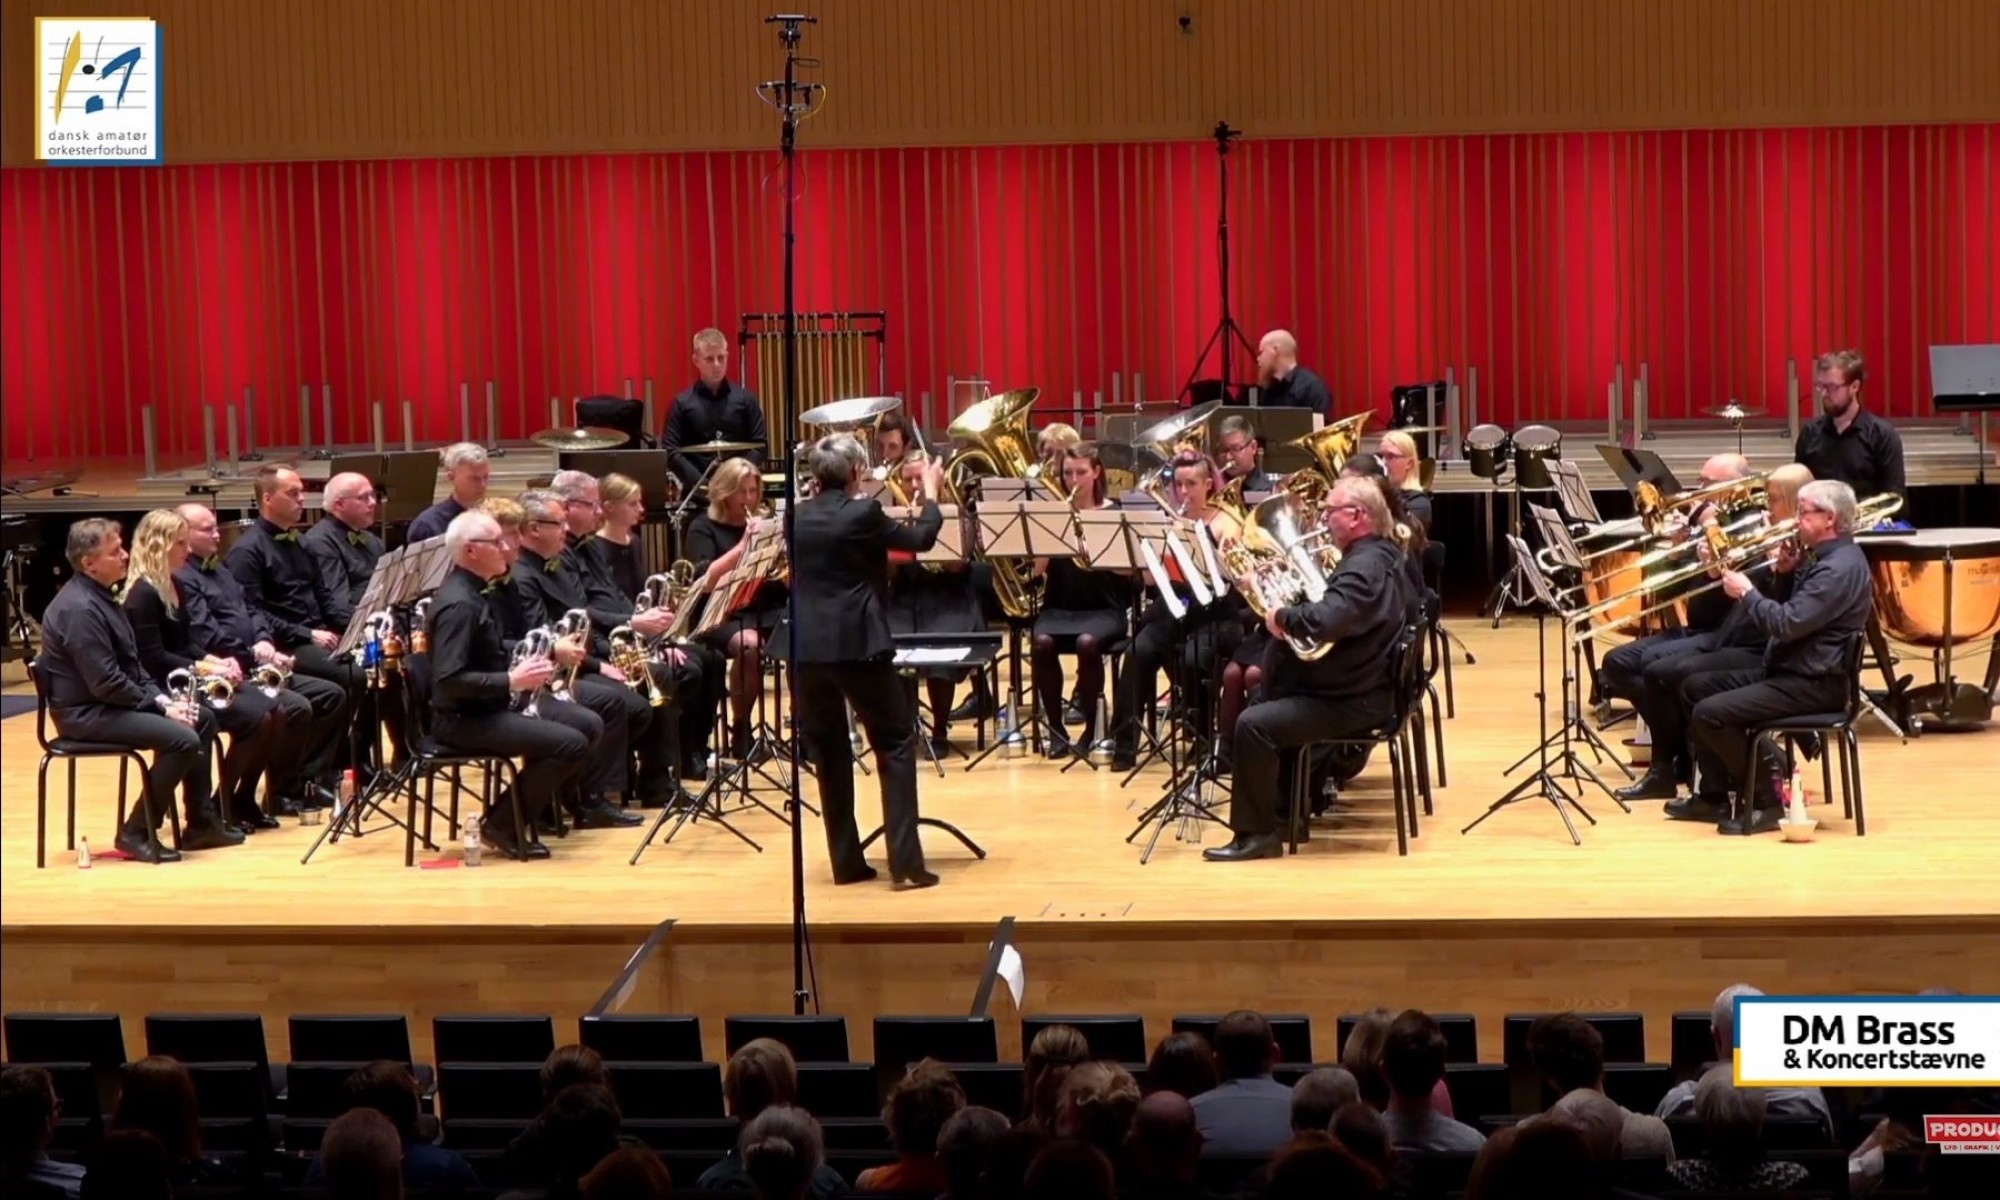 Skanderborg Brass Band